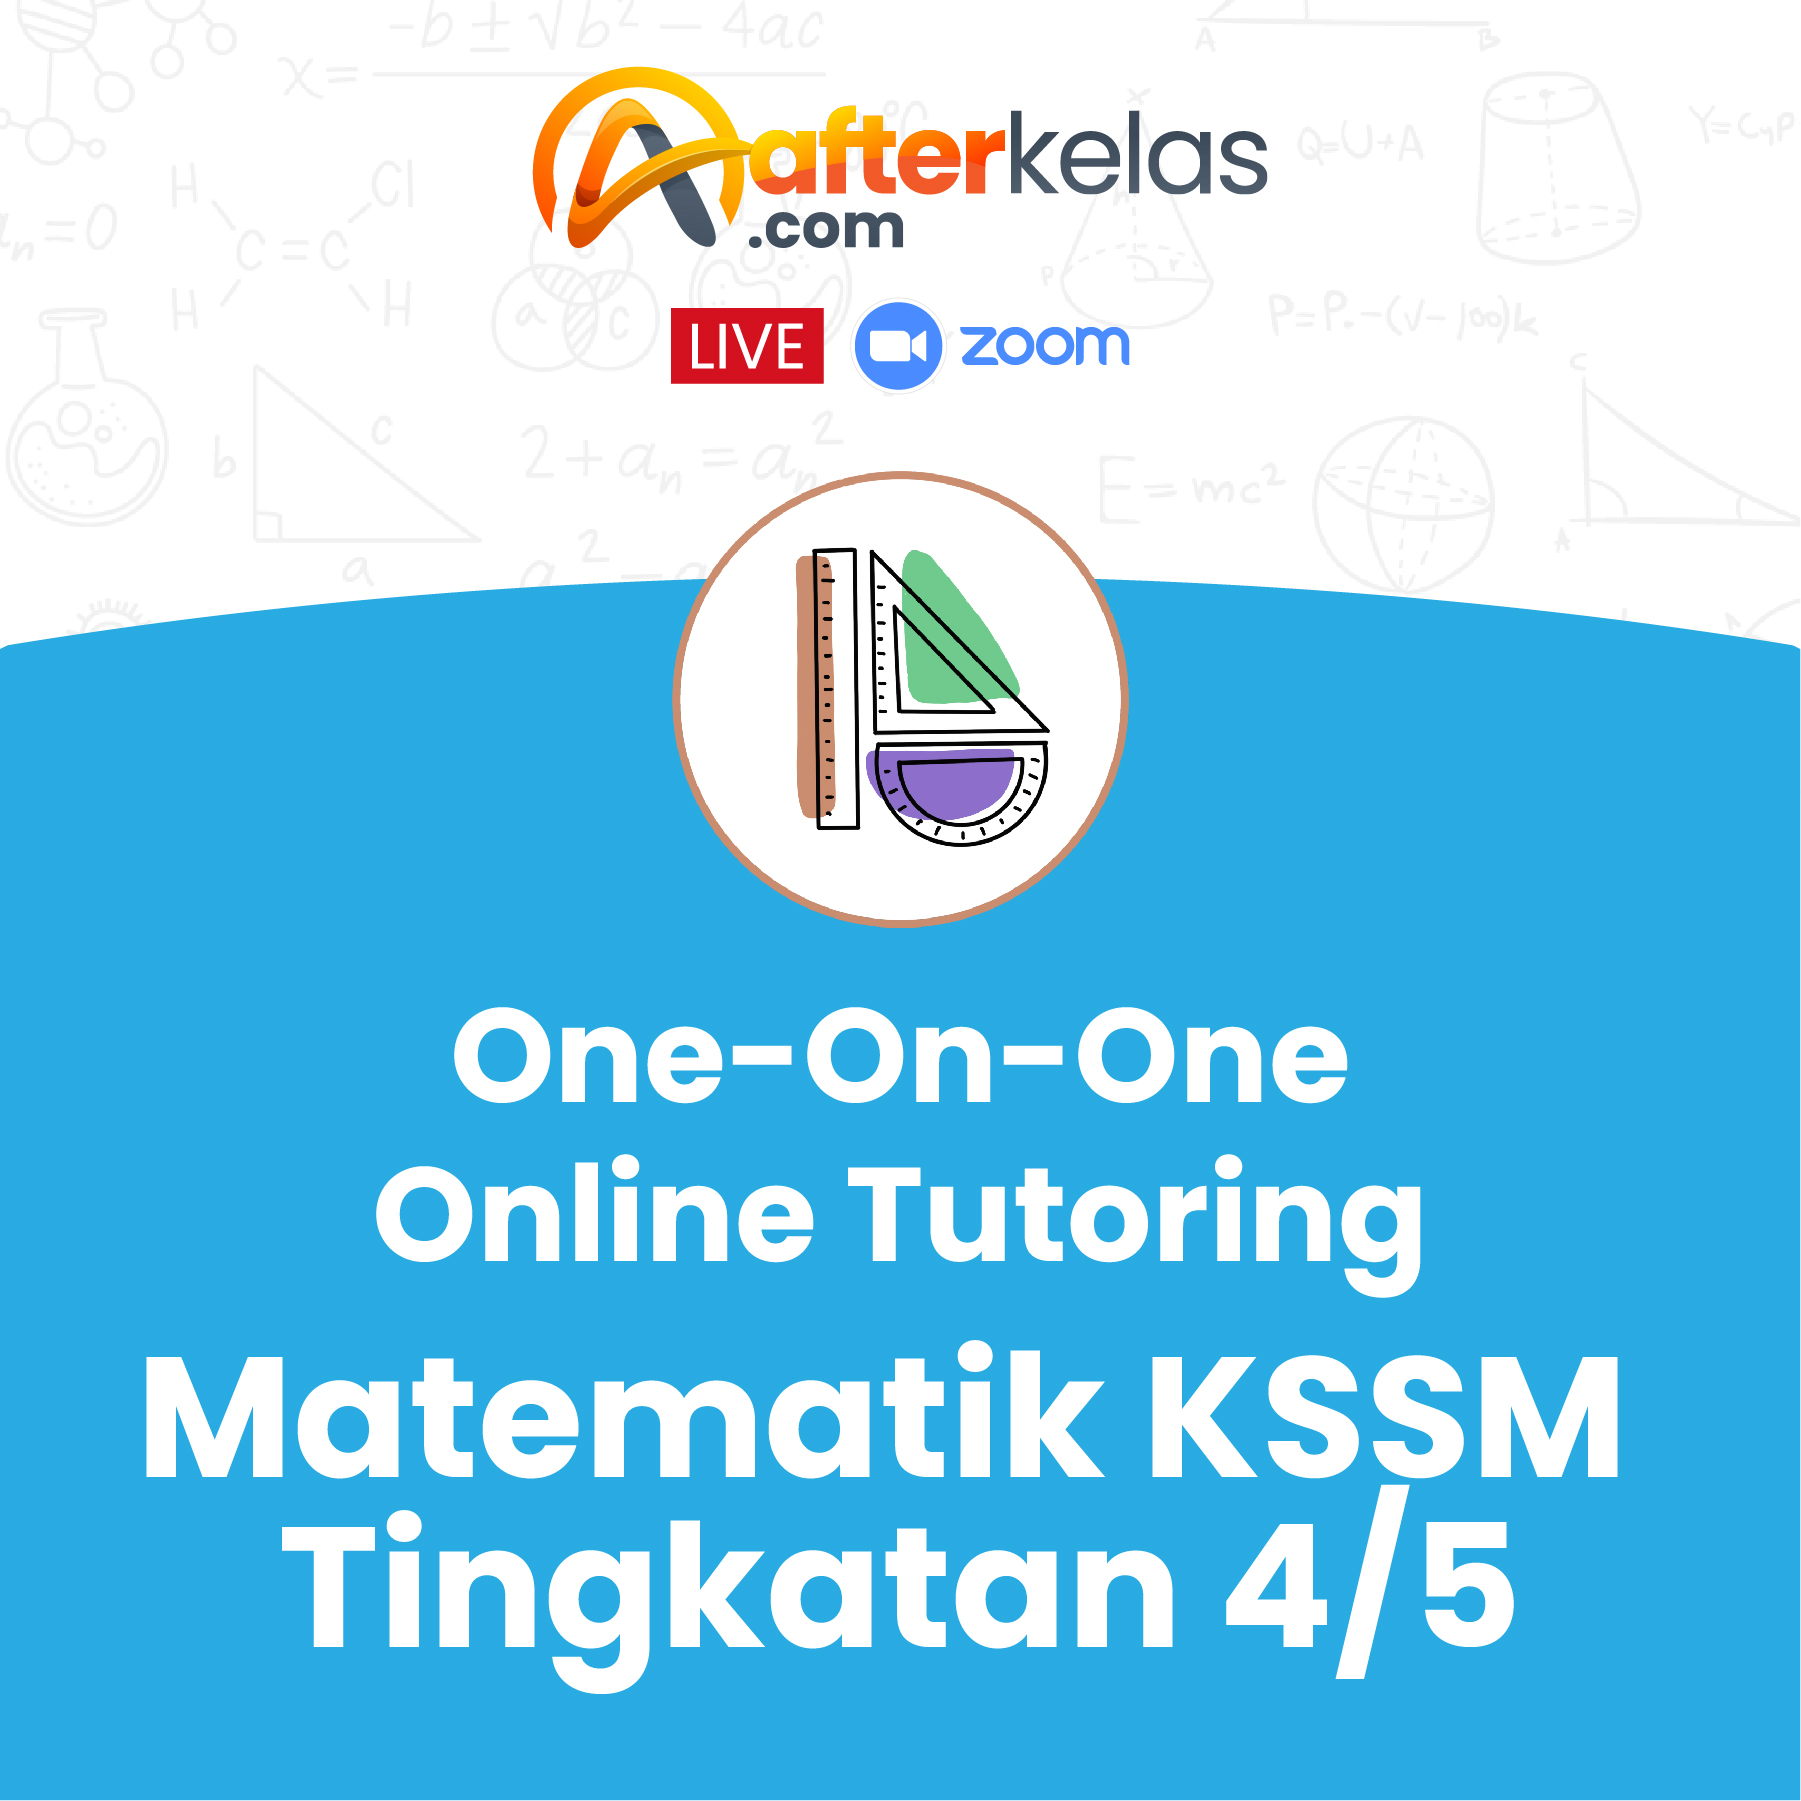 One-on-one Online Tutoring Matematik BM F5 – Tutor Wali x Hisyam